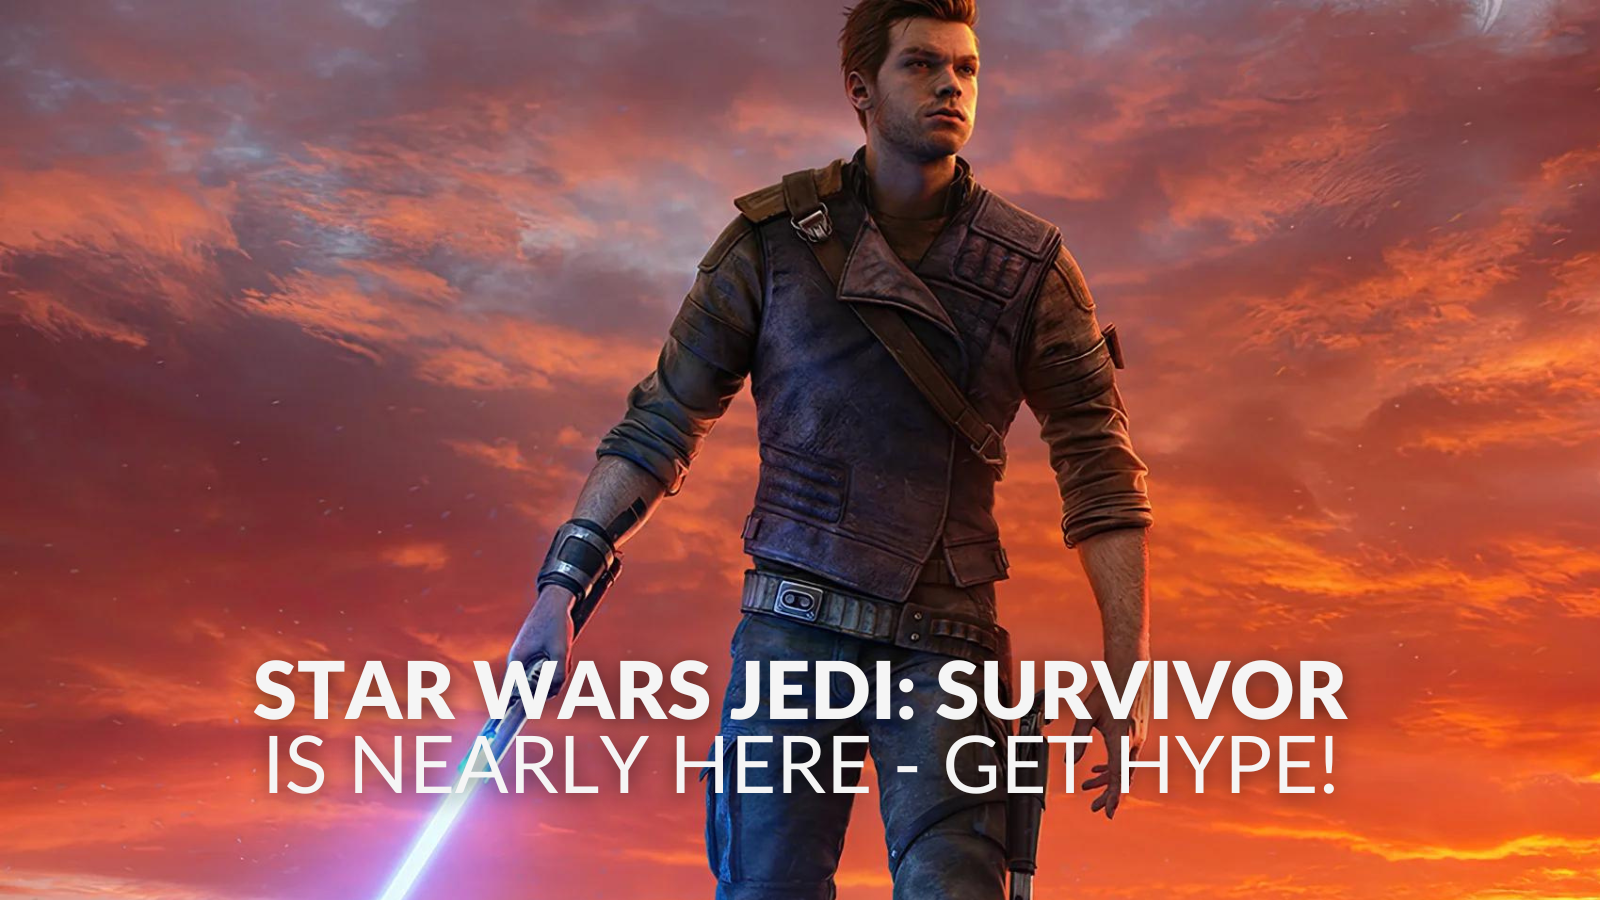 Not even Nvidia's RTX 4090 can handle Jedi: Survivor